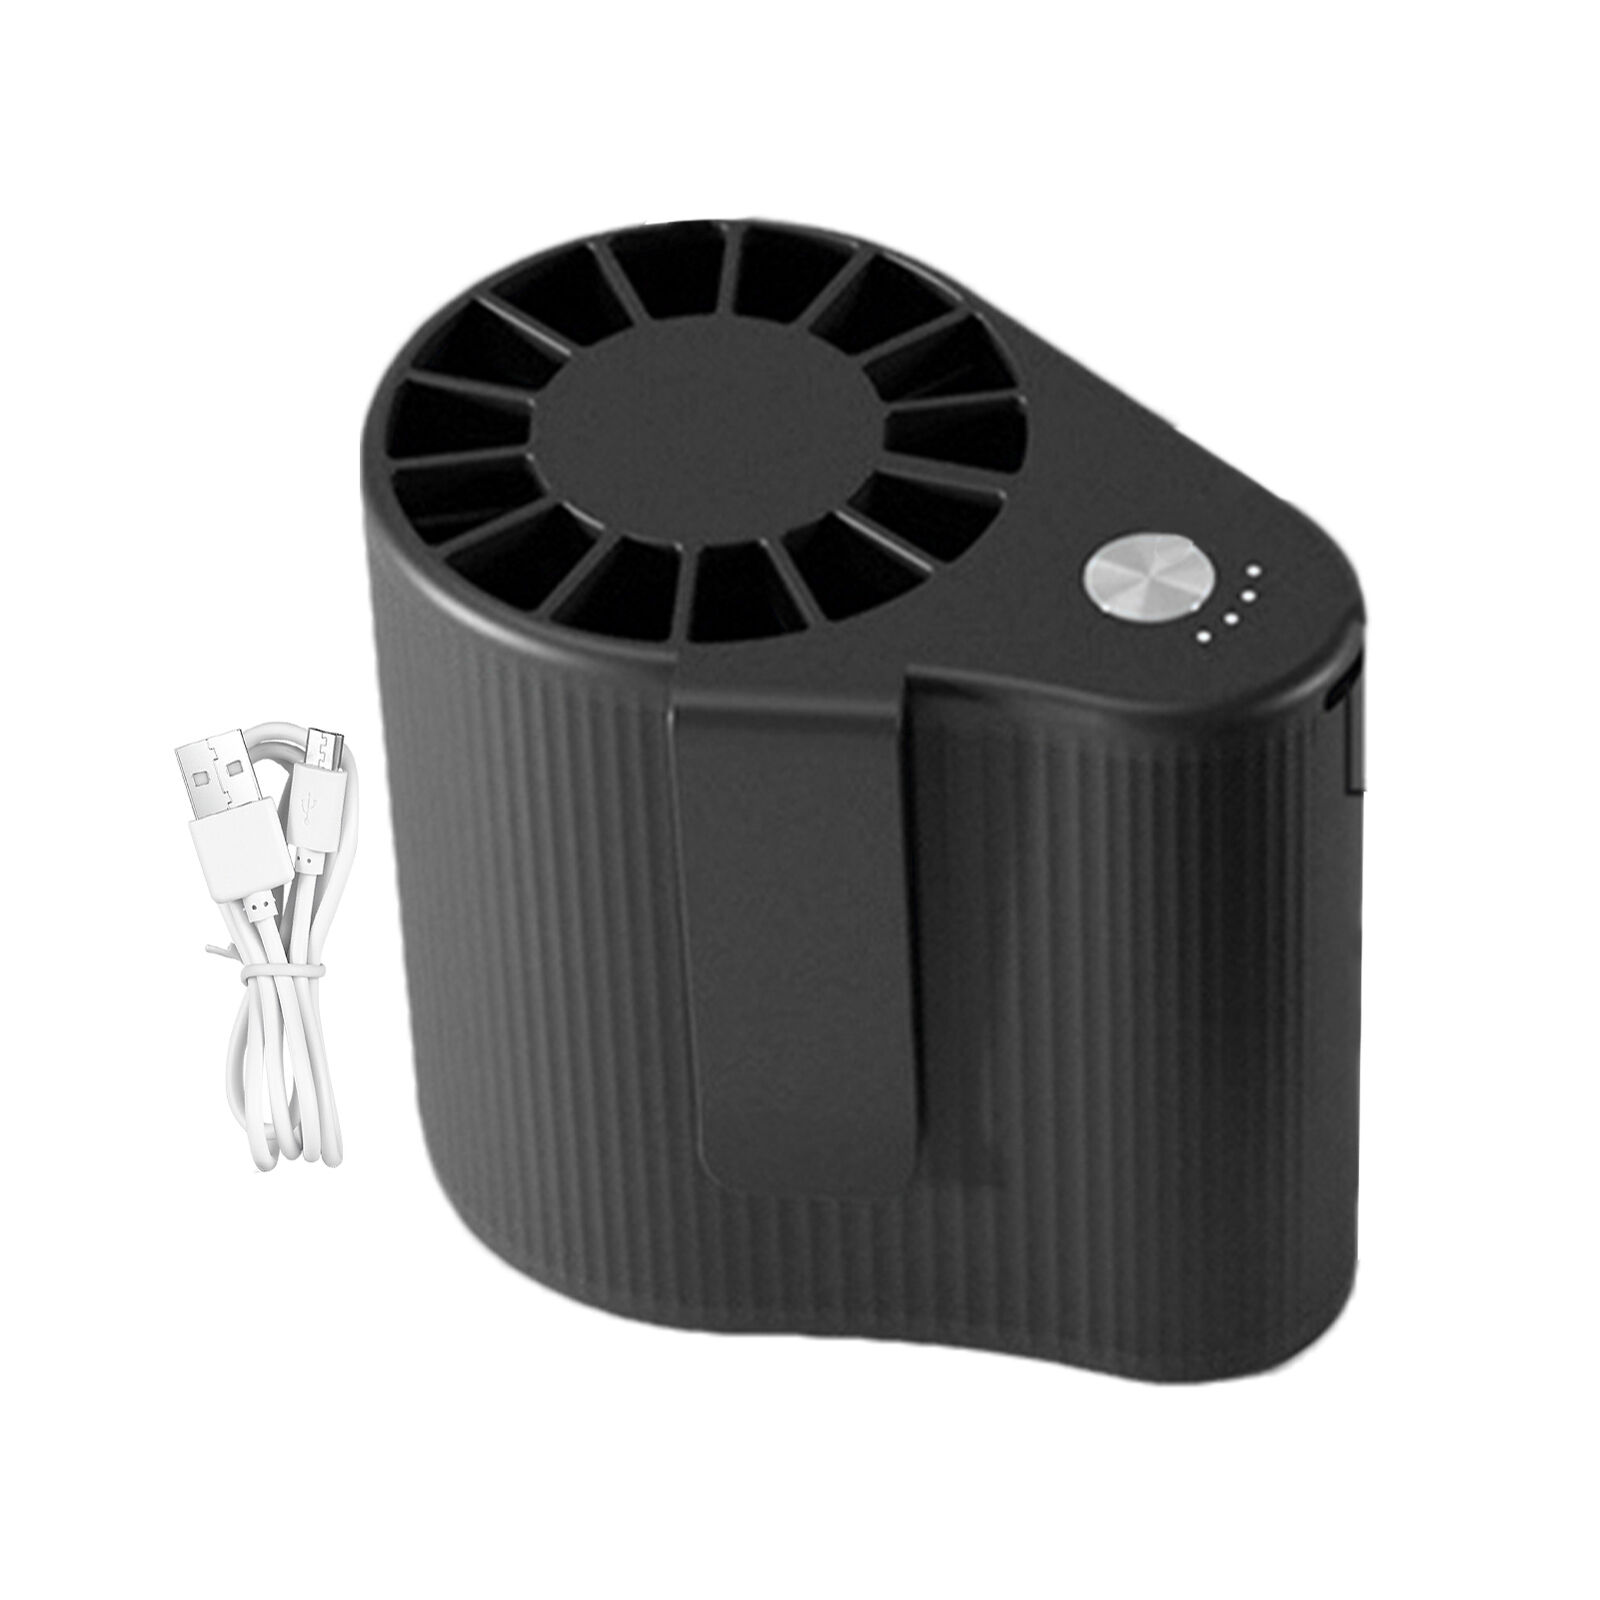 Cool Clip Fan Under Shirt Cool Clip Waist Fan Clip-On Air Cooler Rechargeable